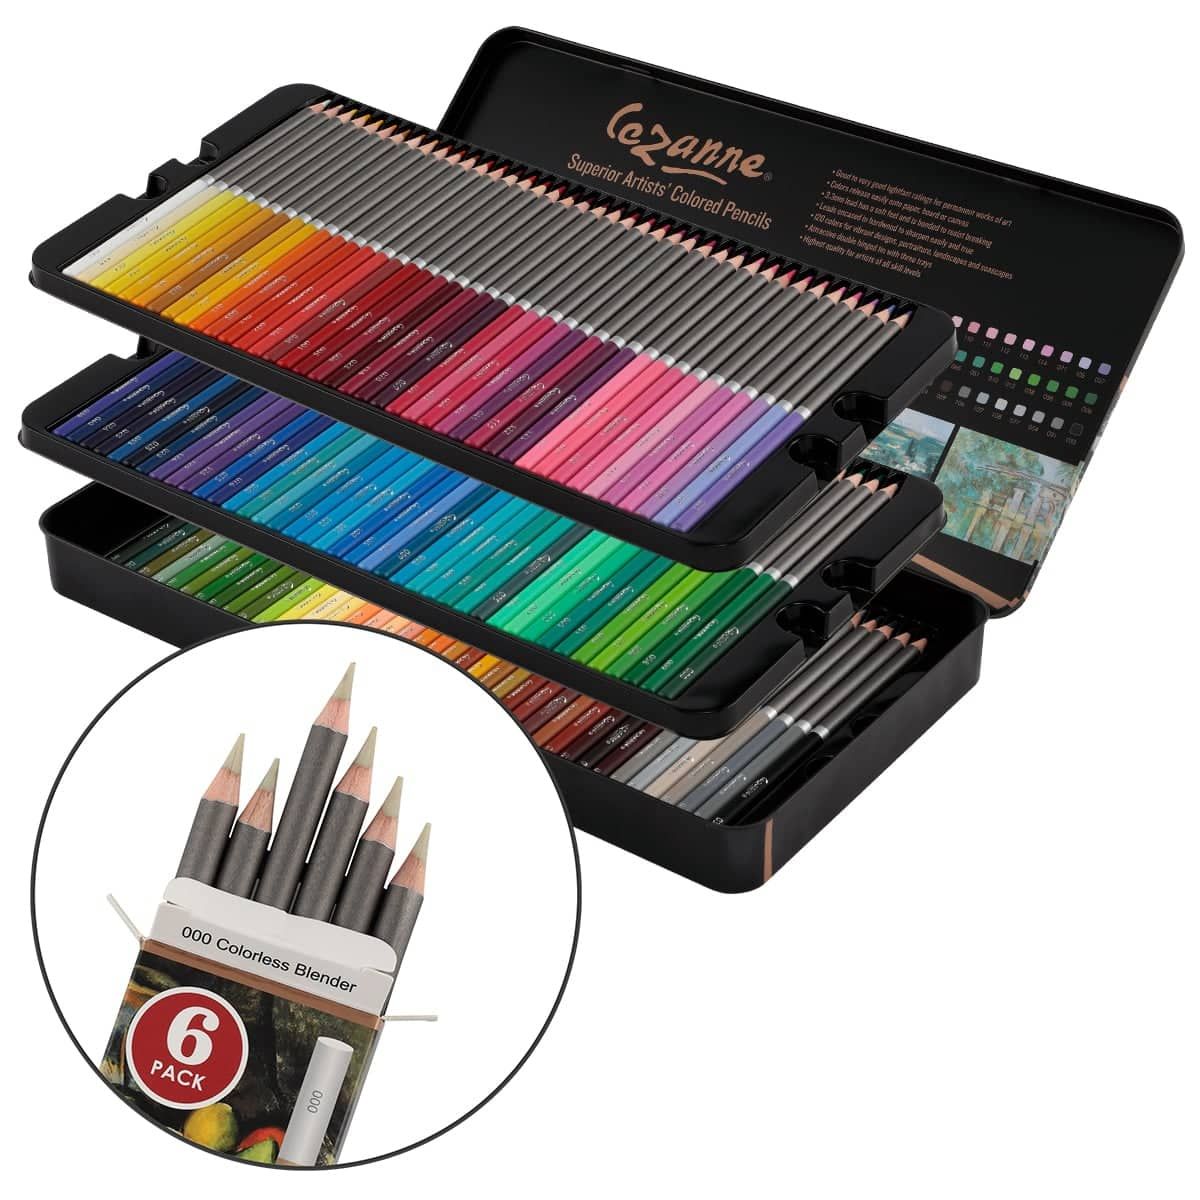 Creative Mark Cezanne 72ct Watercolor Pencils + Mimik Synthetic S